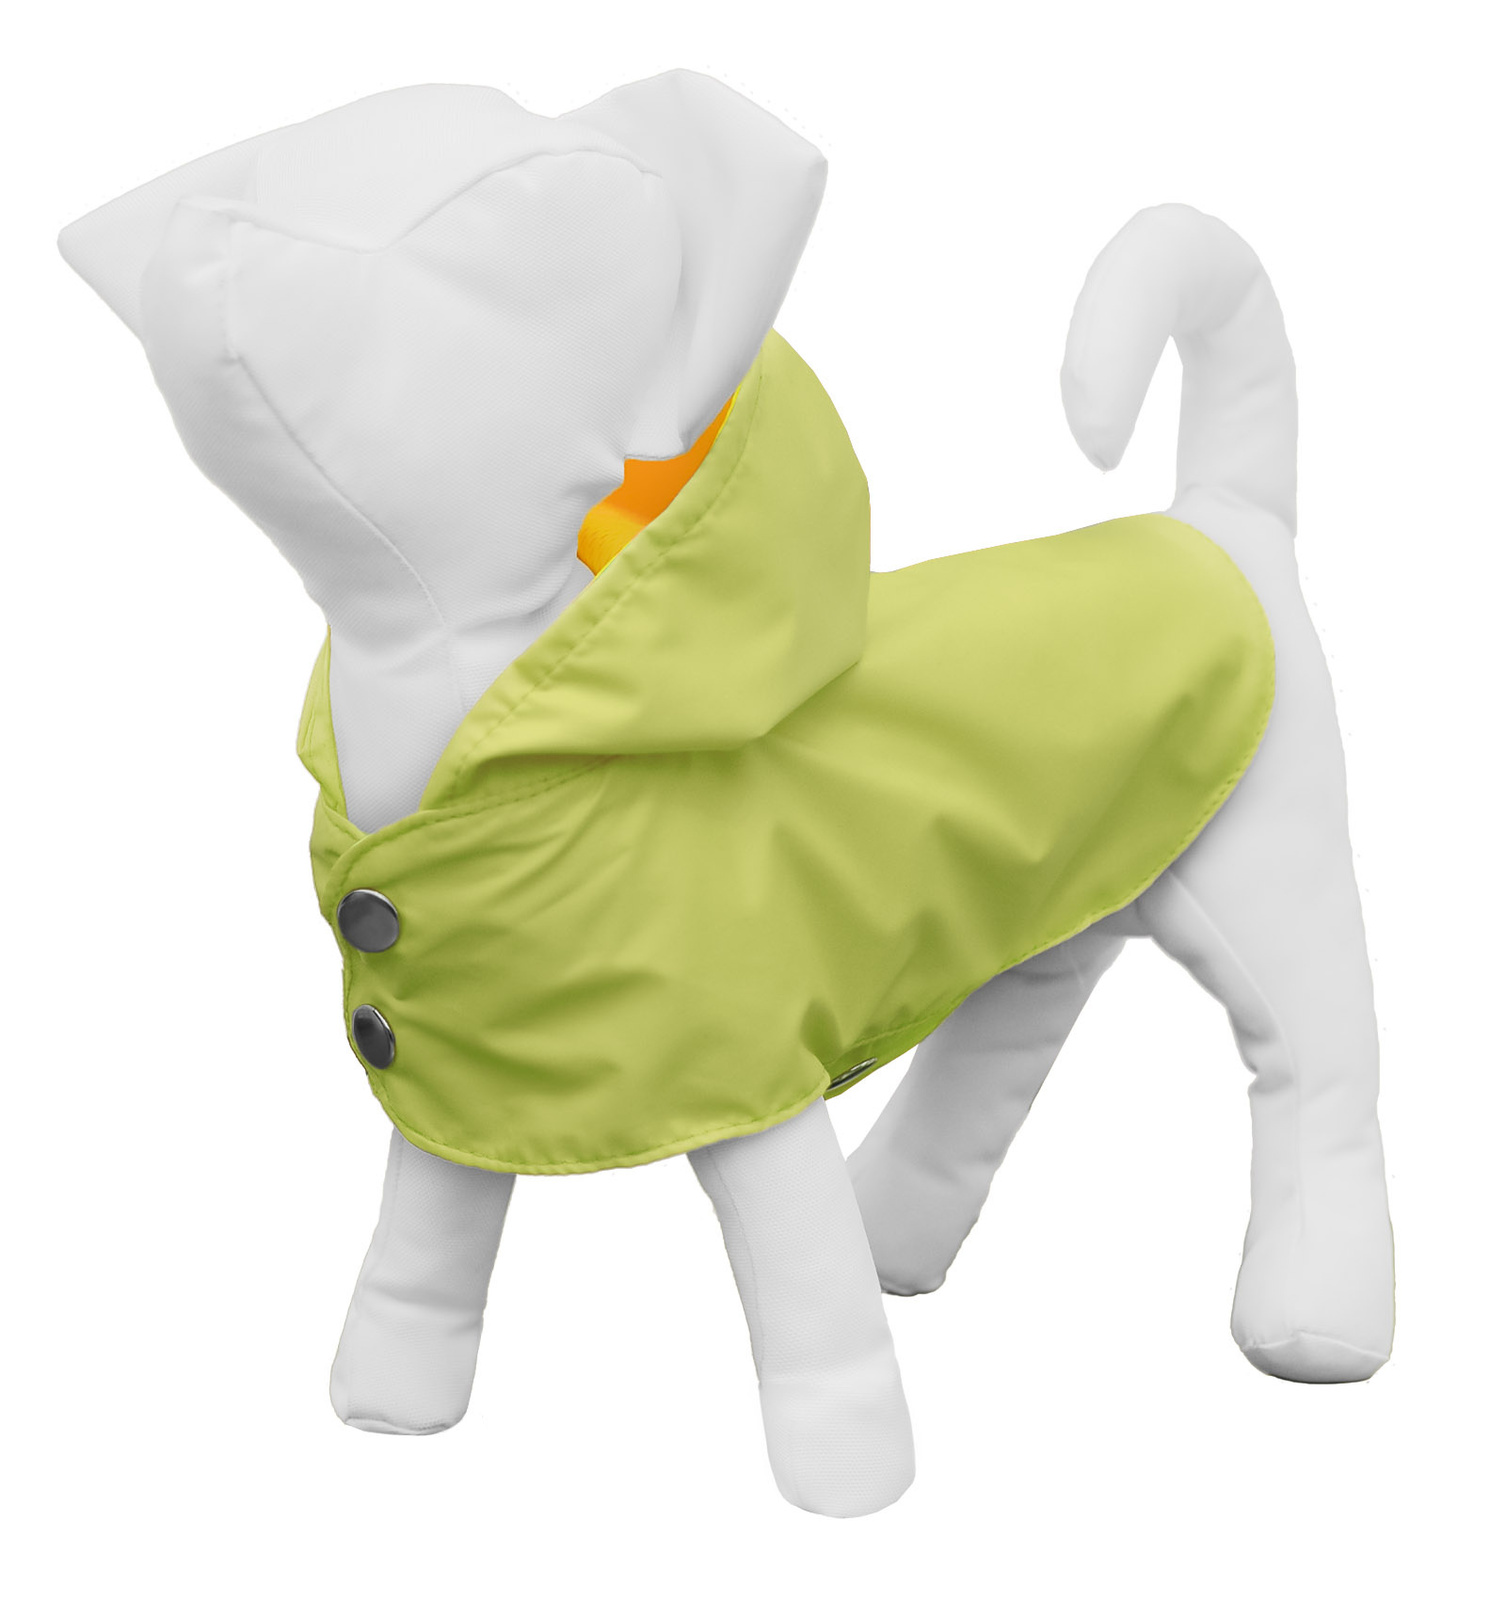 Yami-Yami одежда дождевик-плащ для собак, салатовый (M) Yami-Yami одежда дождевик-плащ для собак, салатовый (M) - фото 1